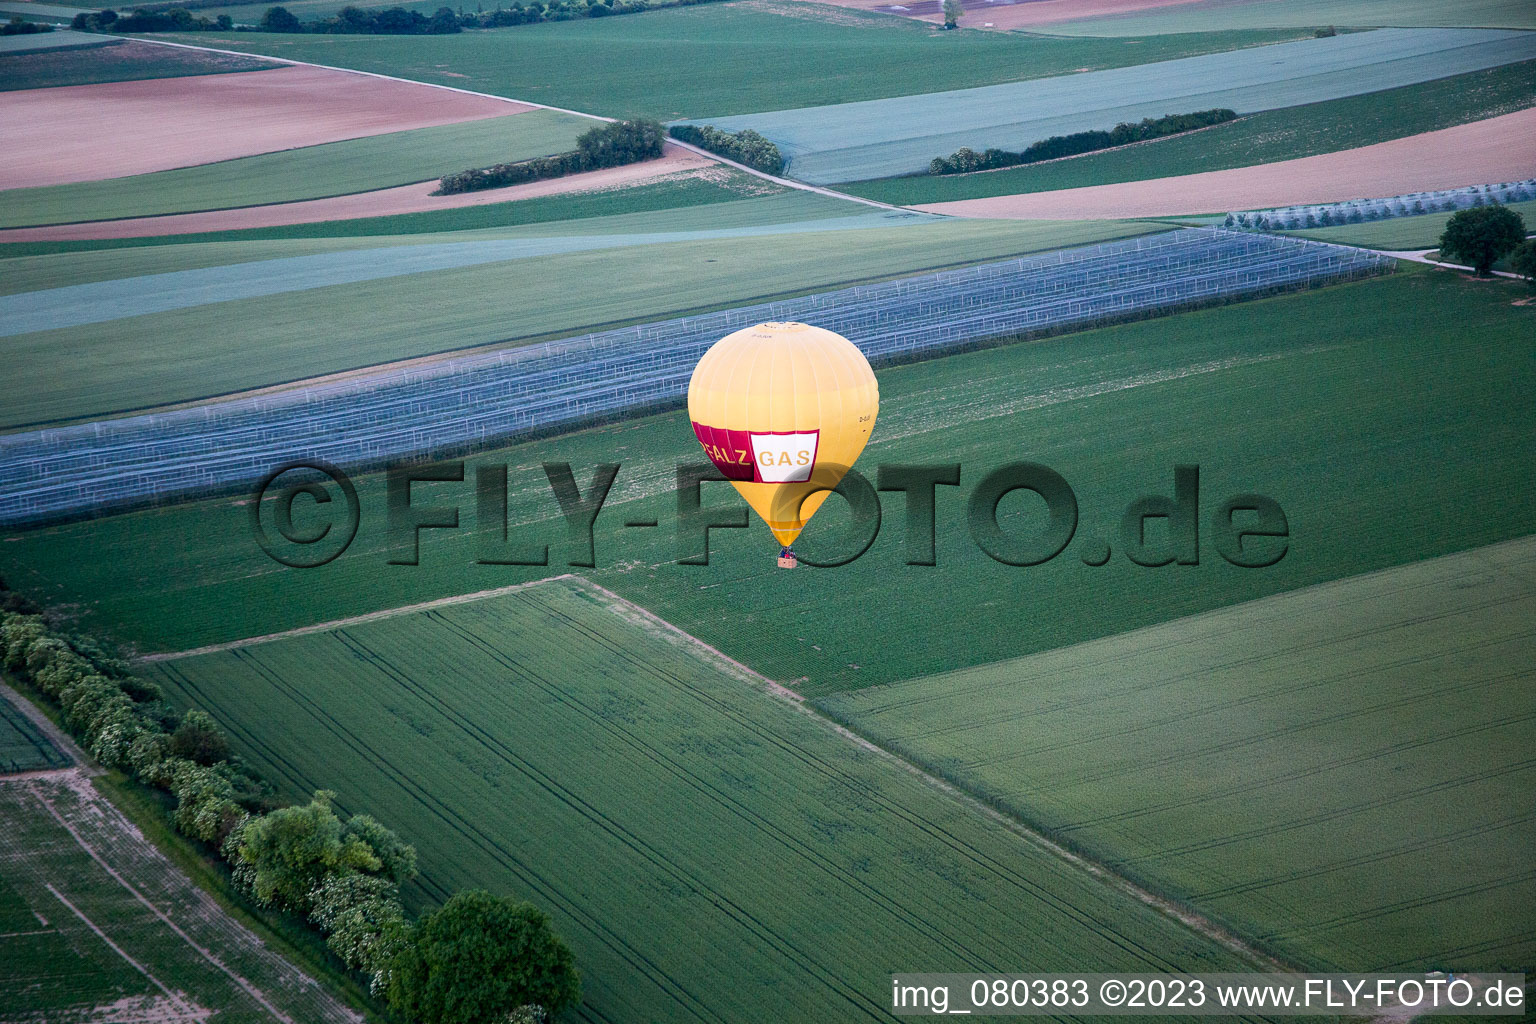 Hot air balloon in the district Herxheim in Herxheim bei Landau/Pfalz in the state Rhineland-Palatinate, Germany